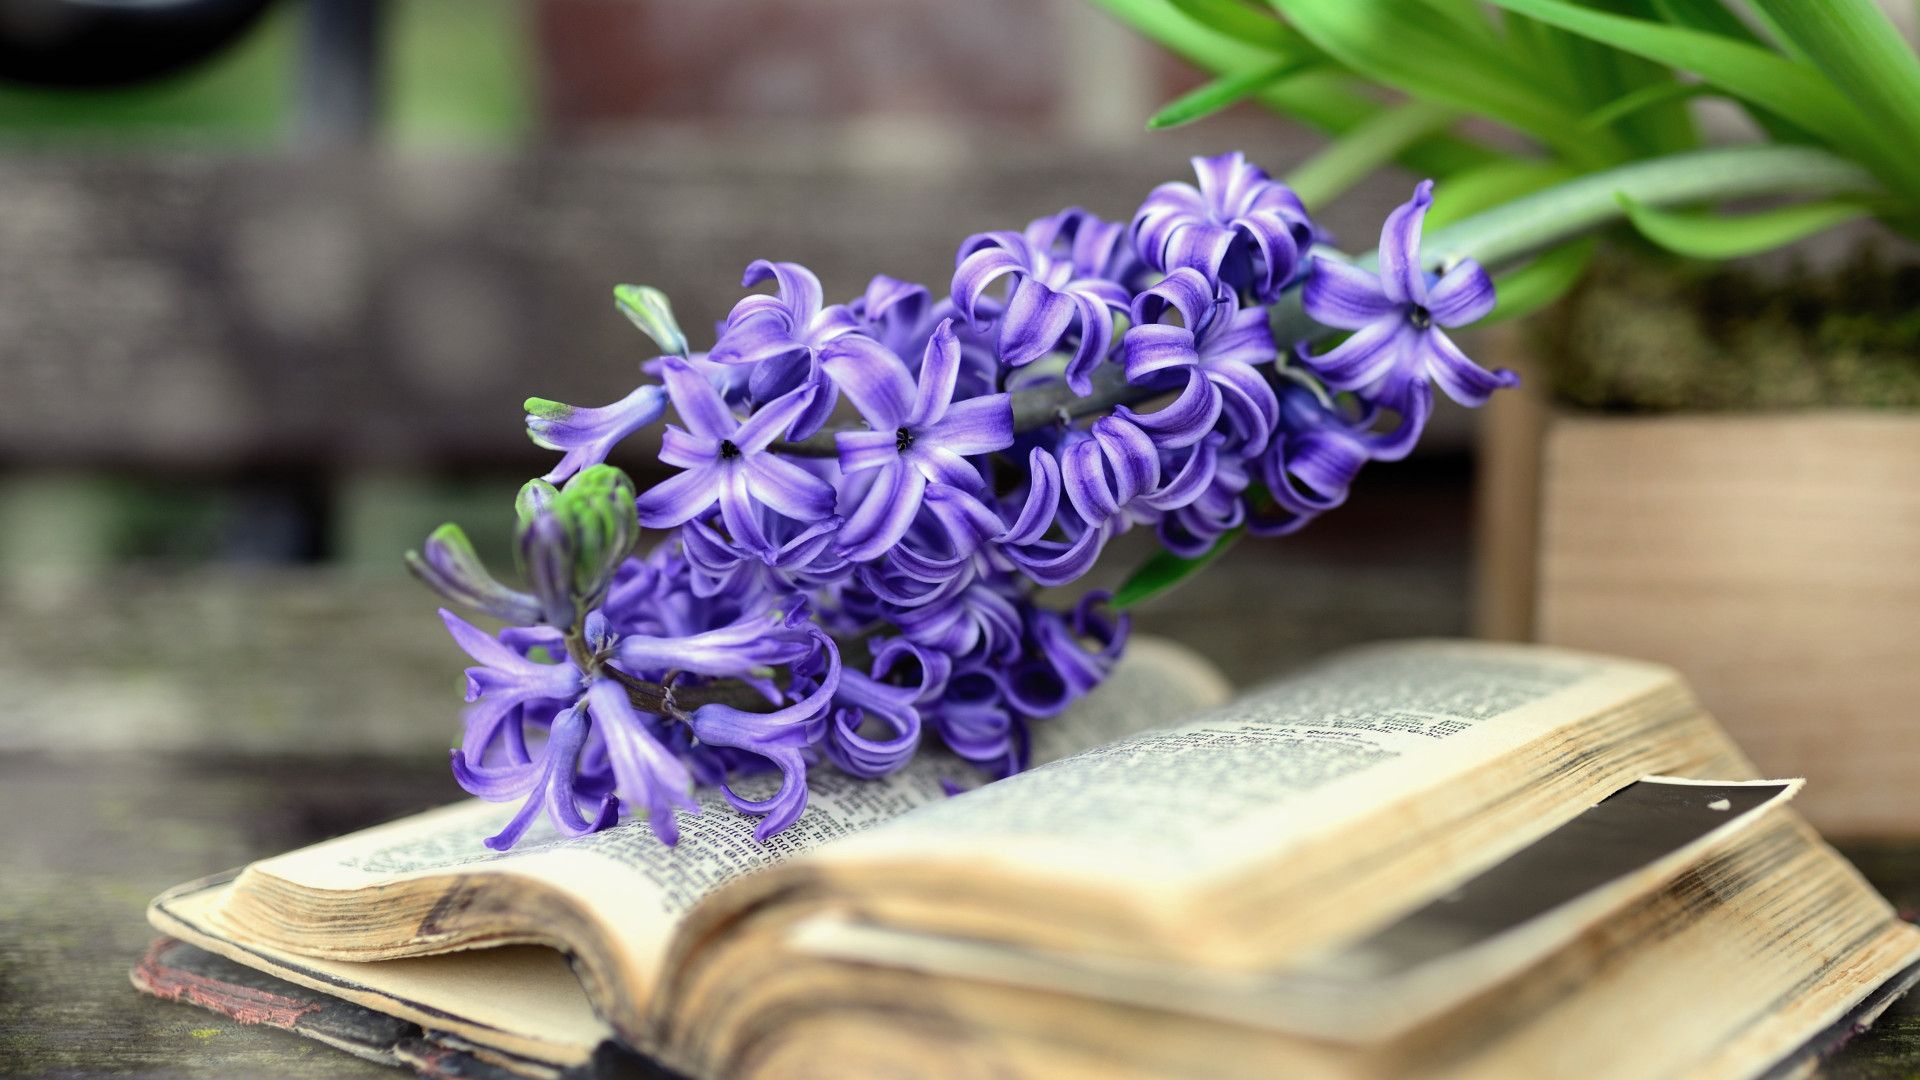 Download wallpaper: Hyacinth Spring flowers 1920x1080